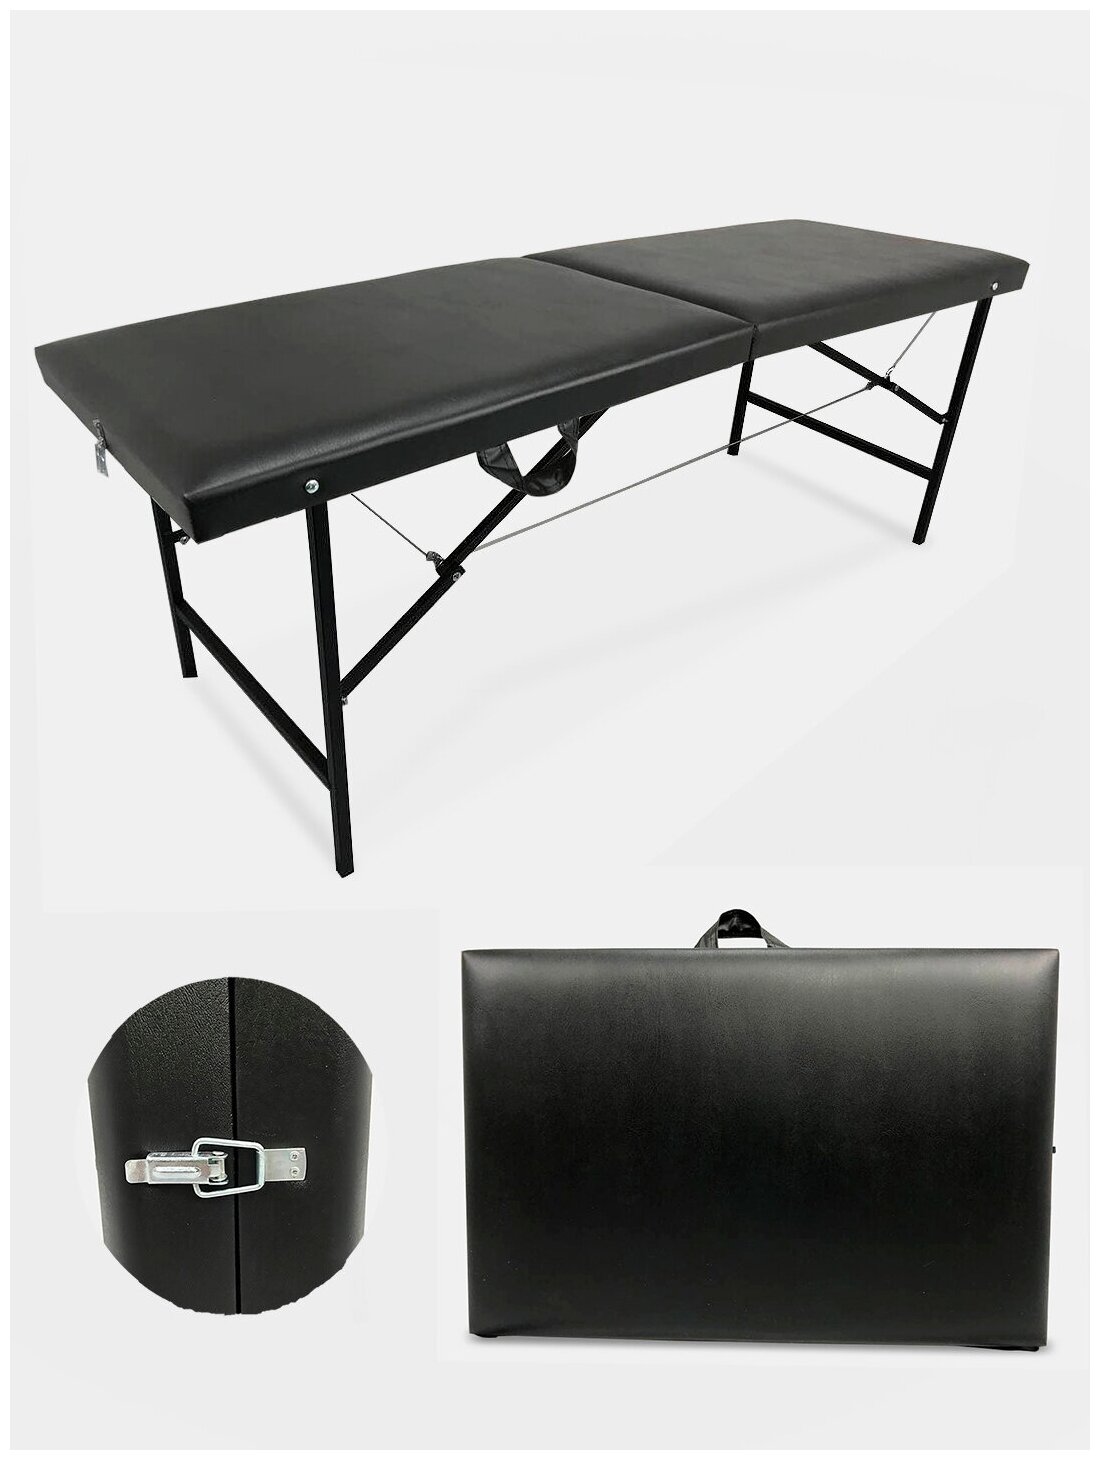 Массажный стол складной 180х60х72 см Черная. Стол для массажа. Кушетка складная массажная.